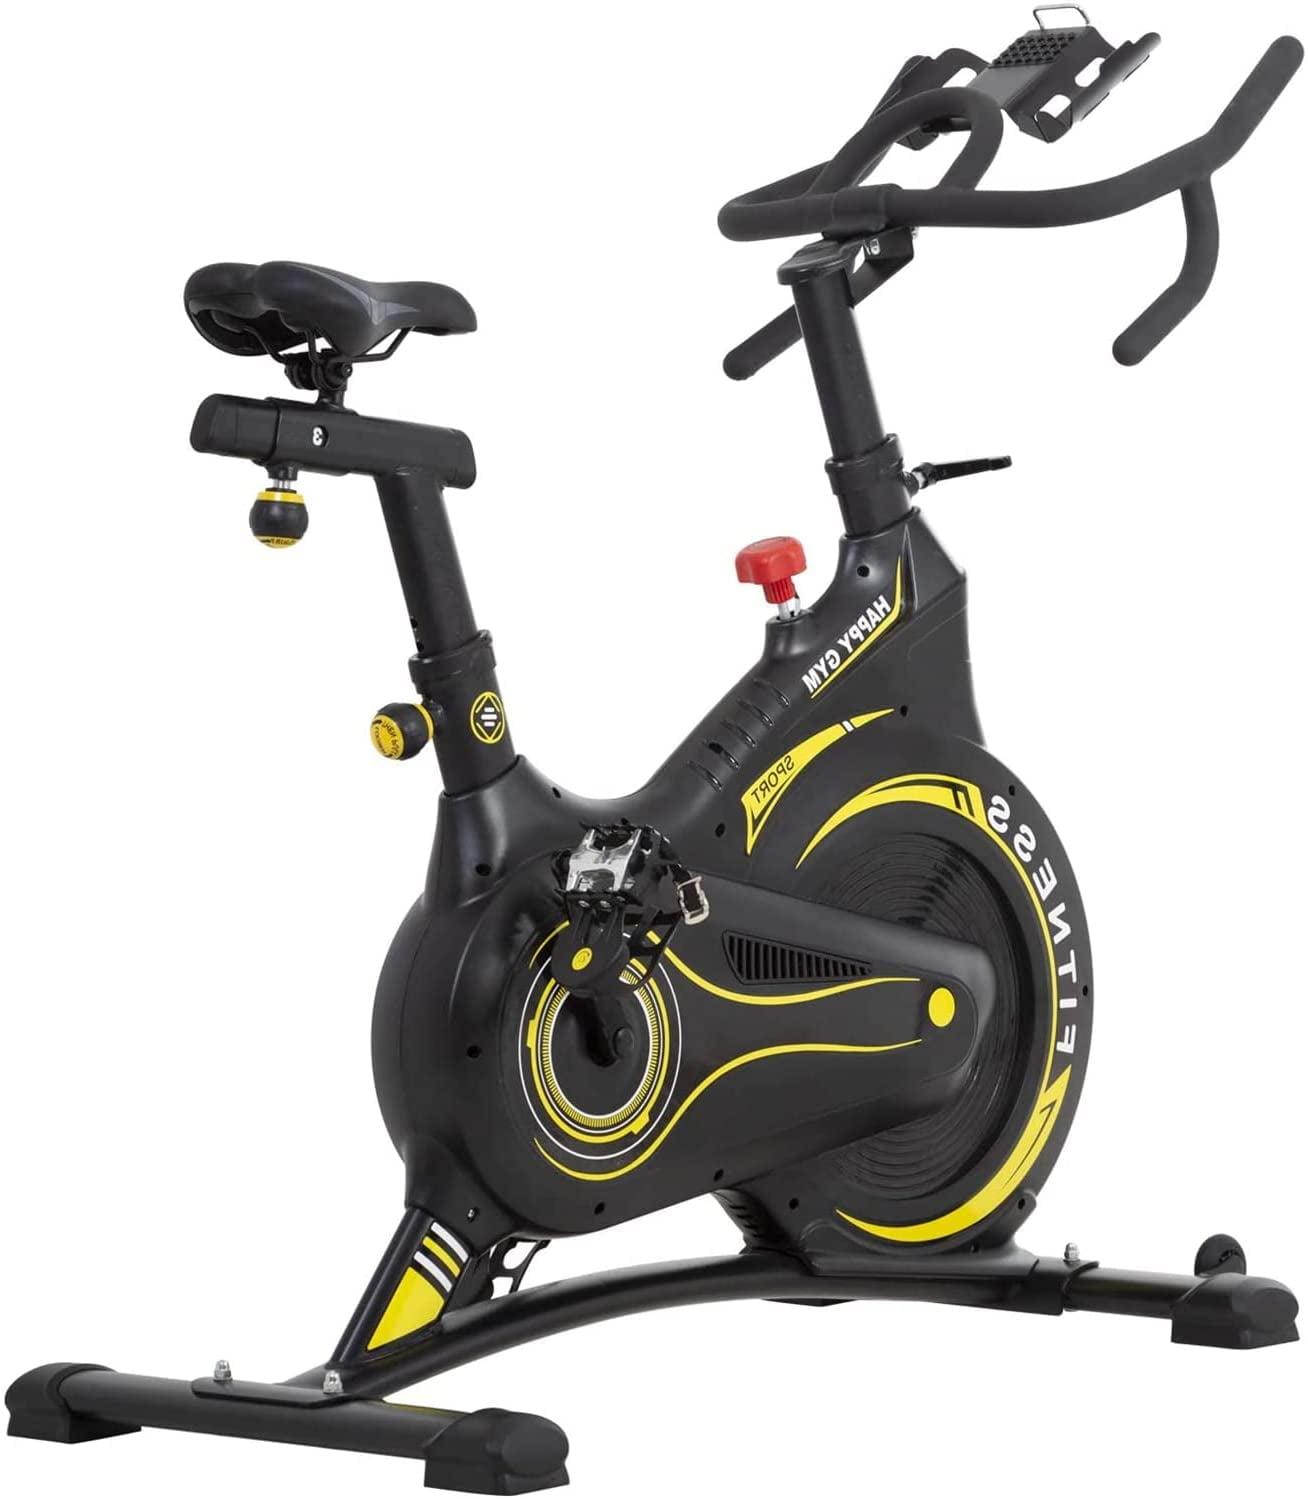 Comeon Exercise Bike Adjustable Fitness Exercise Bike Indoor Sports Bike Spinning Bike Bicycle with Display